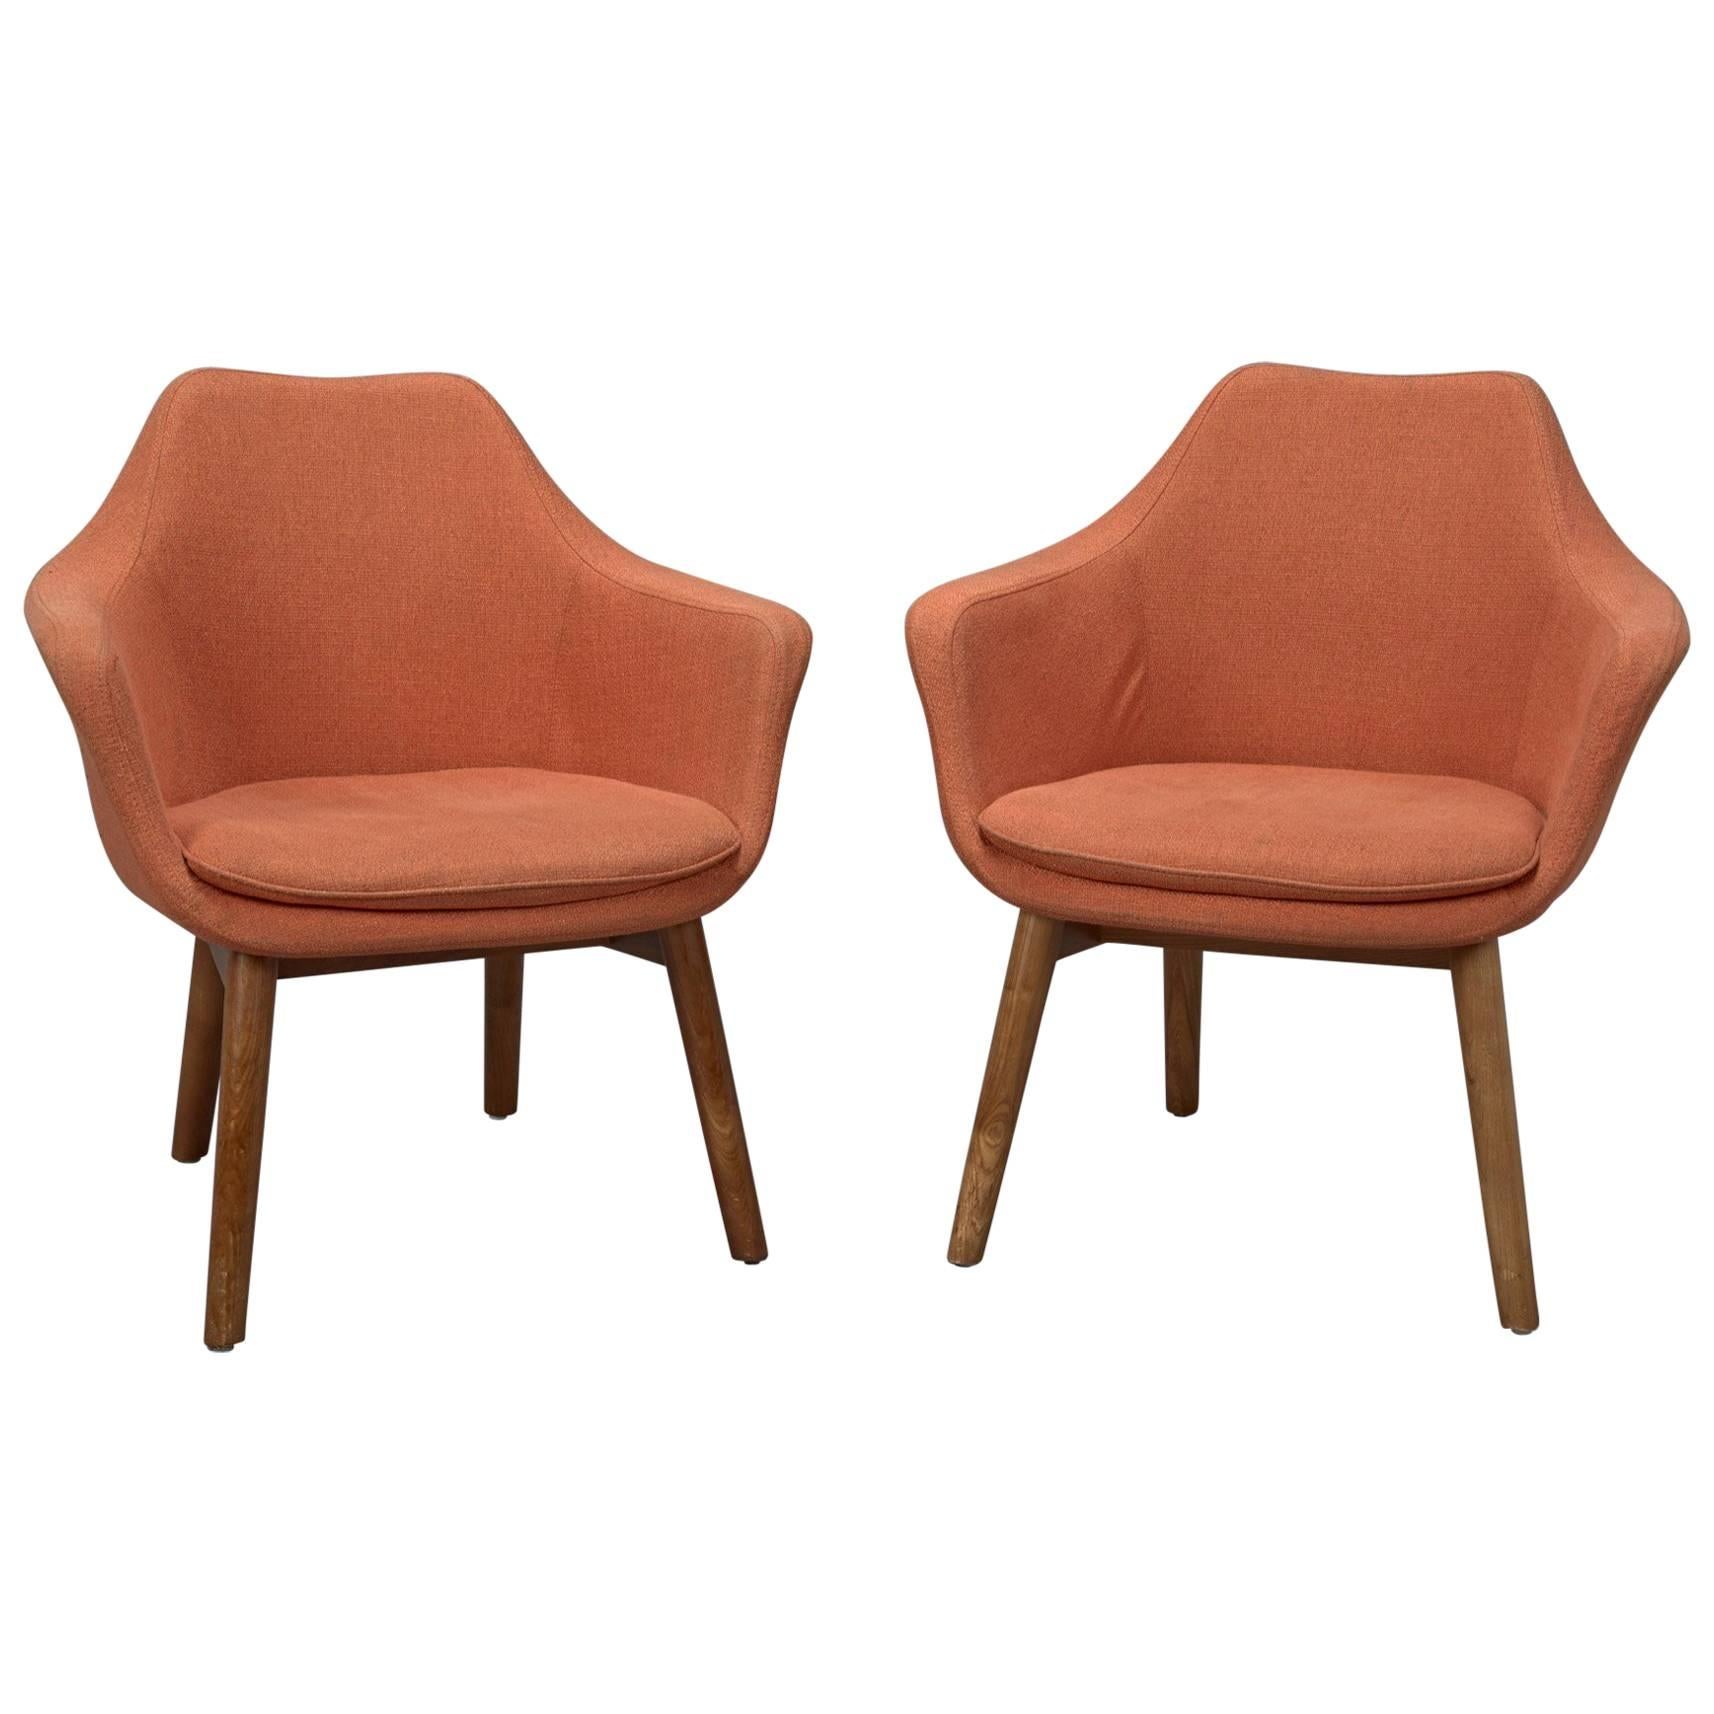 Pair of Orange Fabric Mid-Century Modern Armchairs in Style of Eero Saarinen For Sale